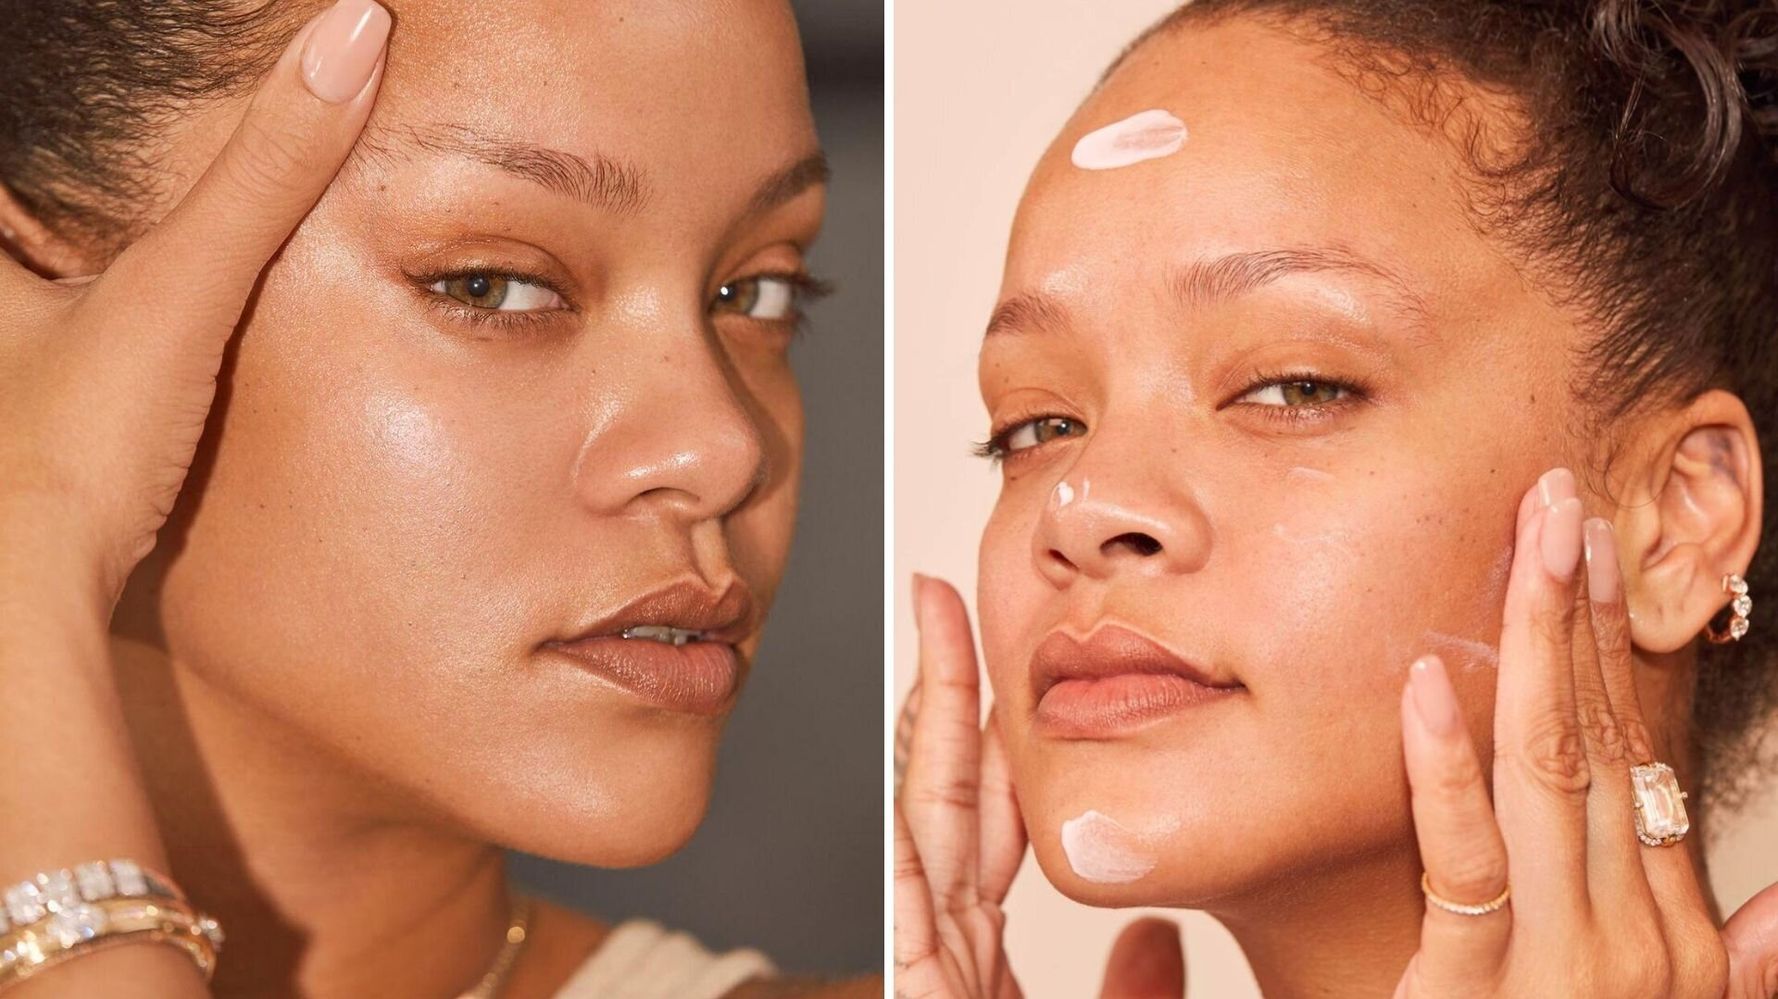 Rihanna's Fenty Skin Has an Official Launch Date